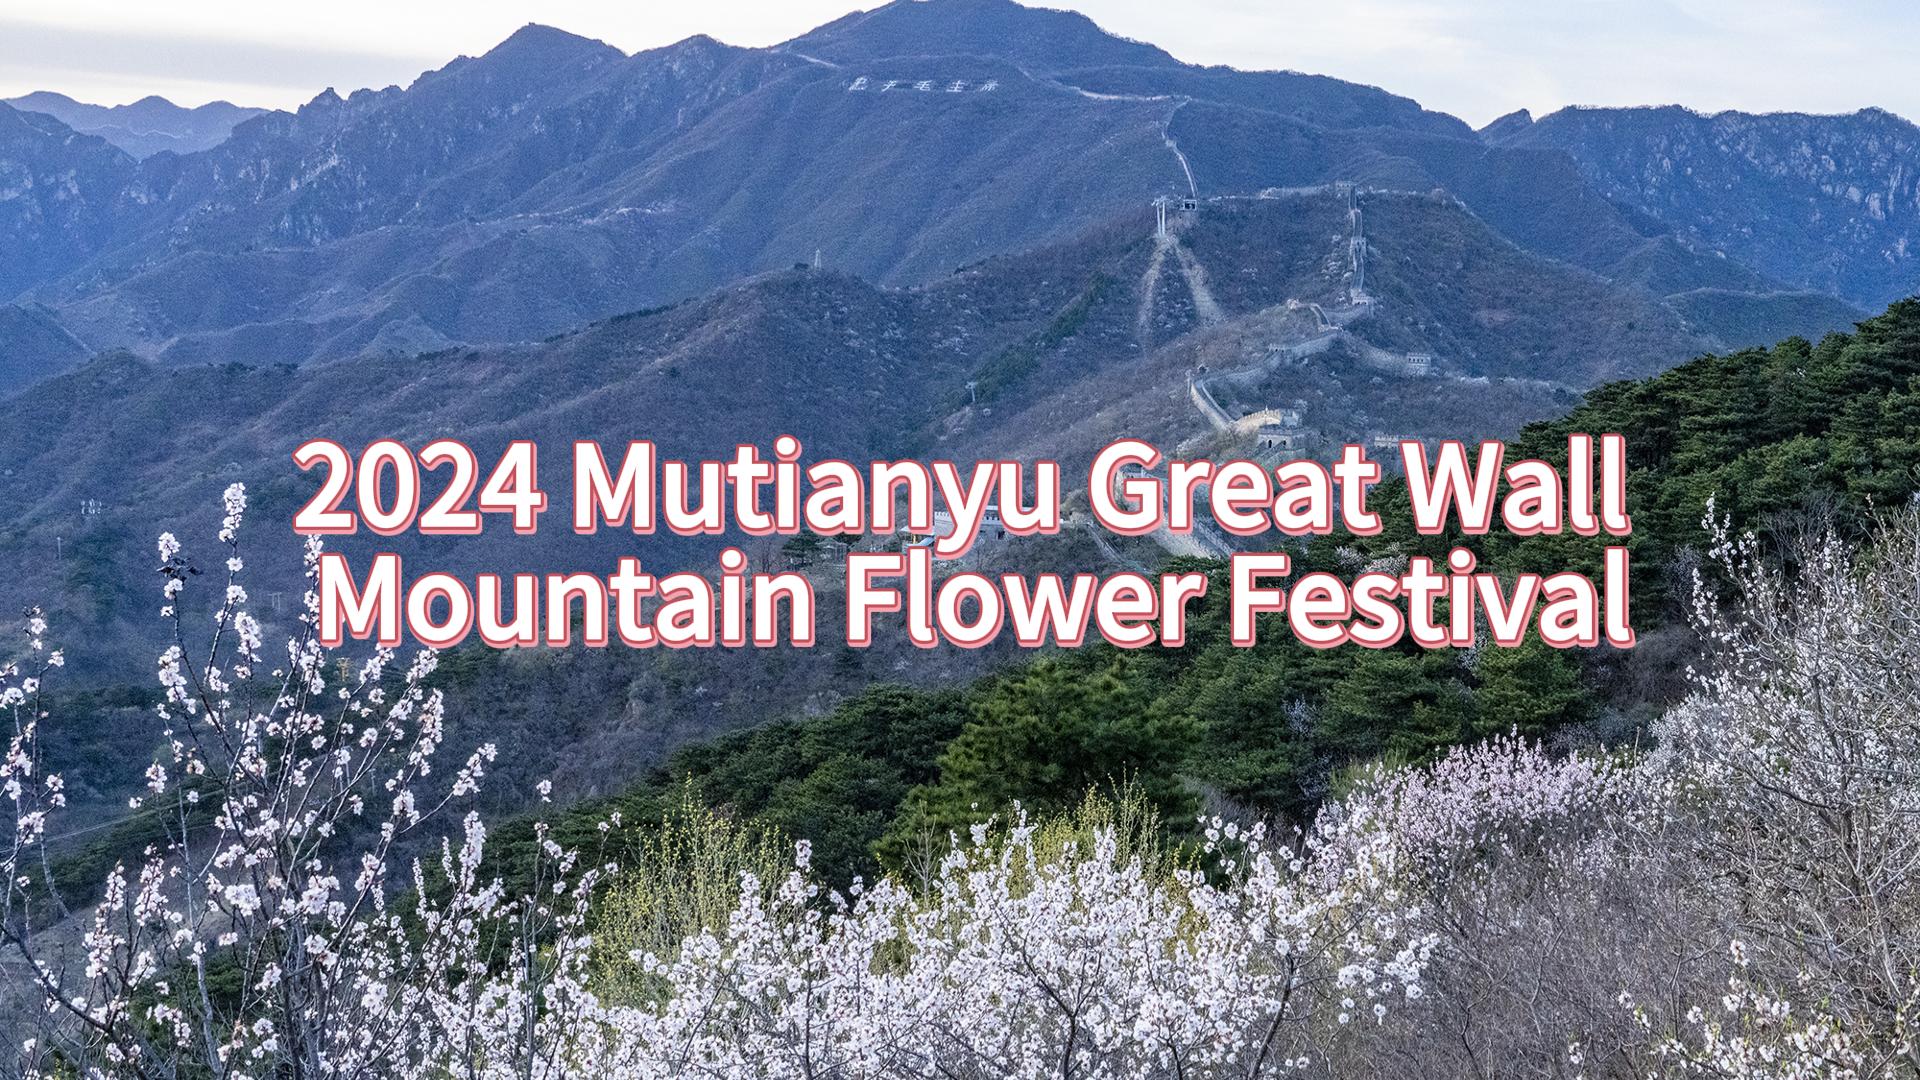 2024 Mutianyu Great Wall Mountain Flower Festival officially kicks off